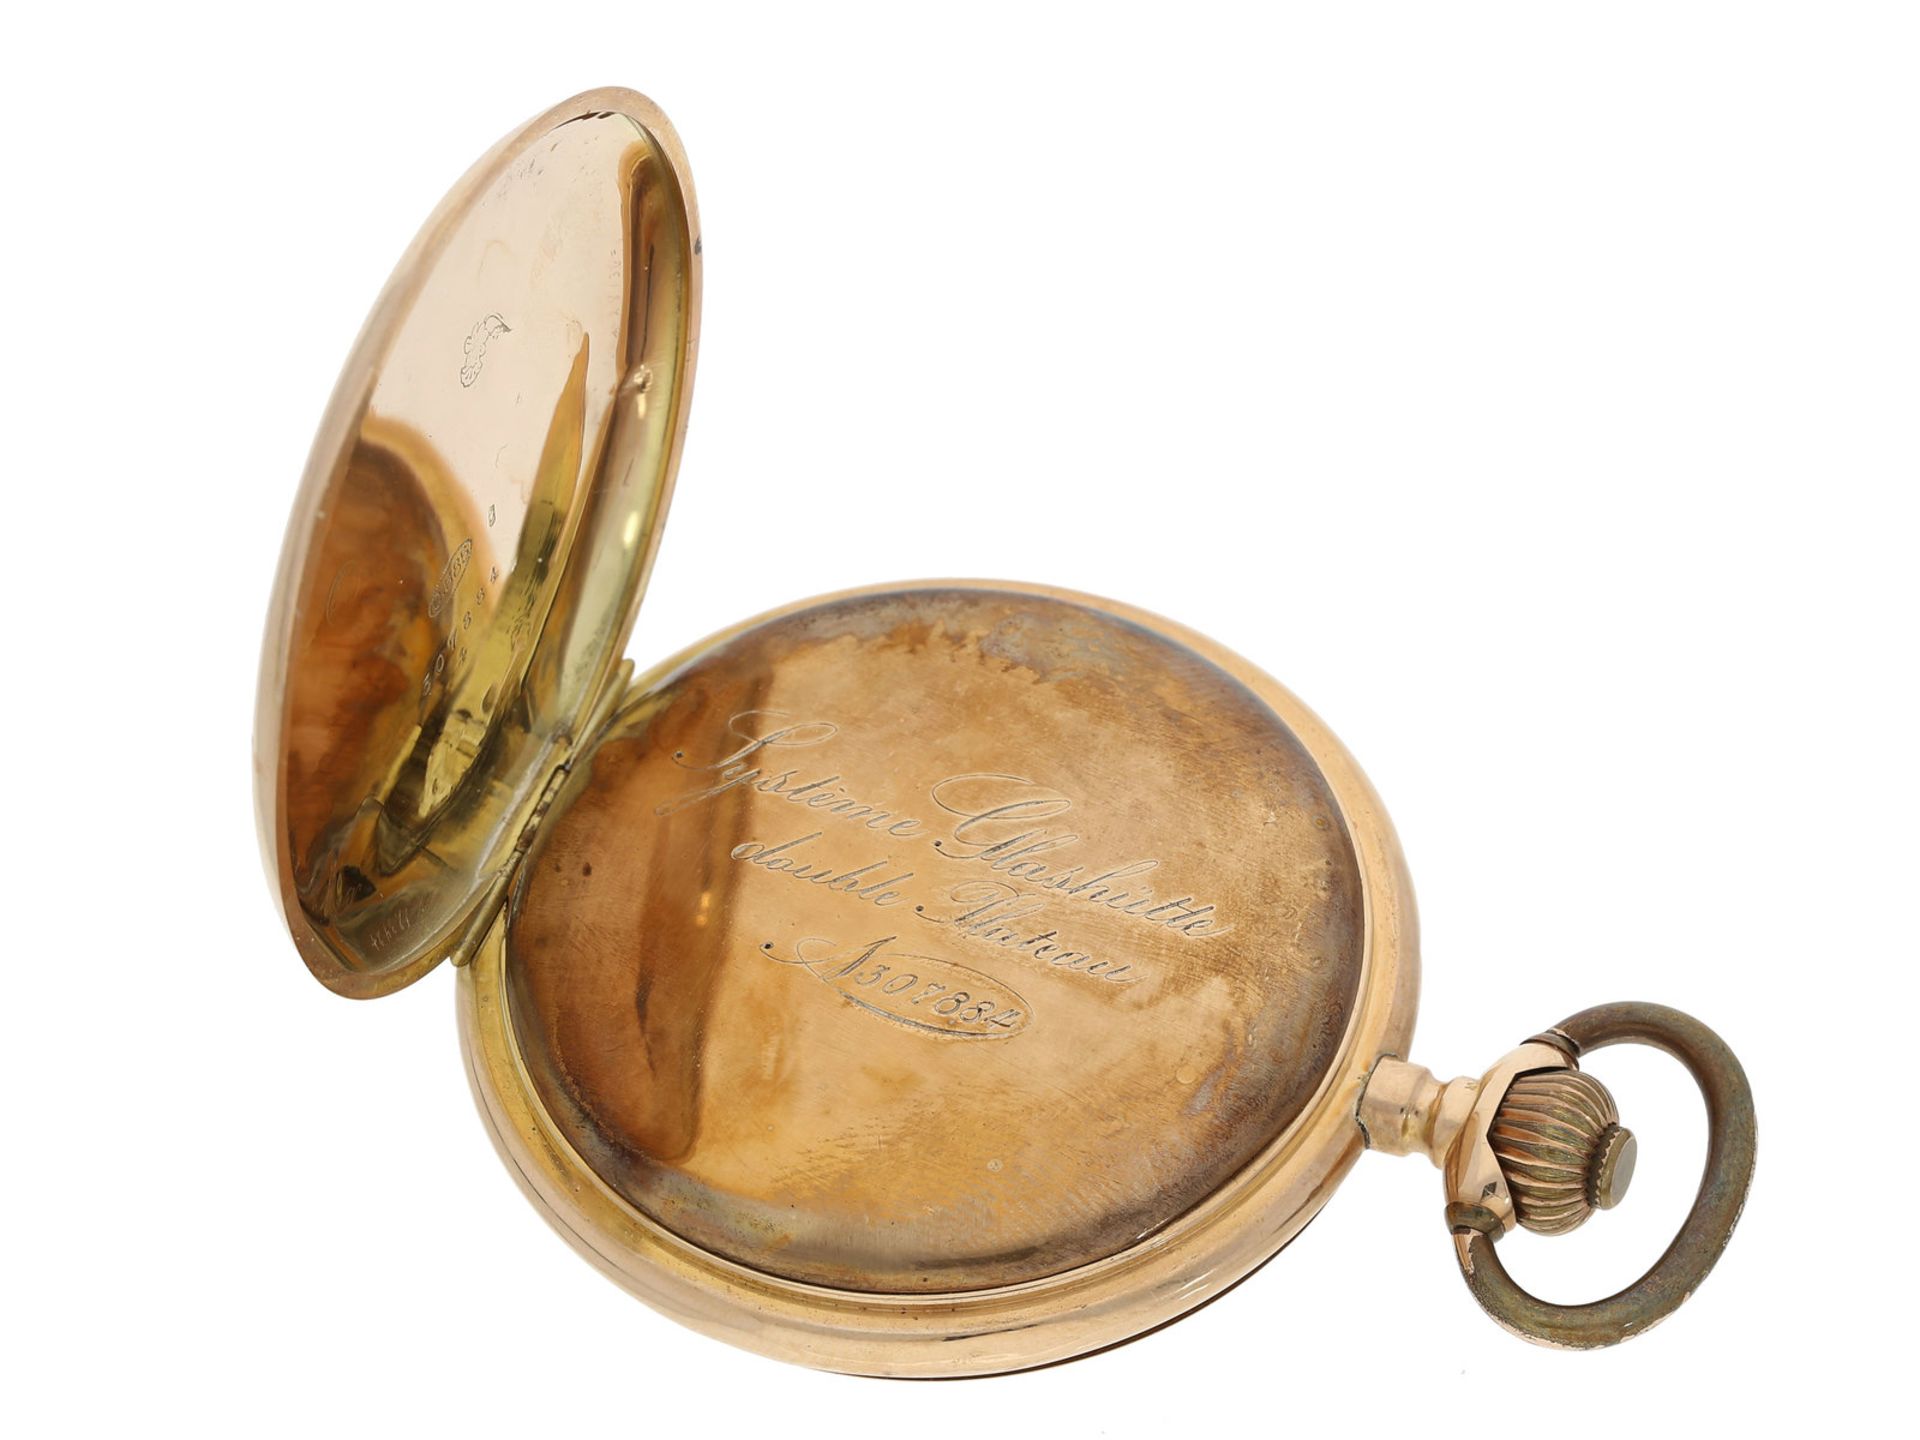 Taschenuhr: 14K Goldsavonnette, System Glashütte No. 307884, inkl. 14K Gold Uhrenkette, ca. 1920 - Bild 2 aus 4